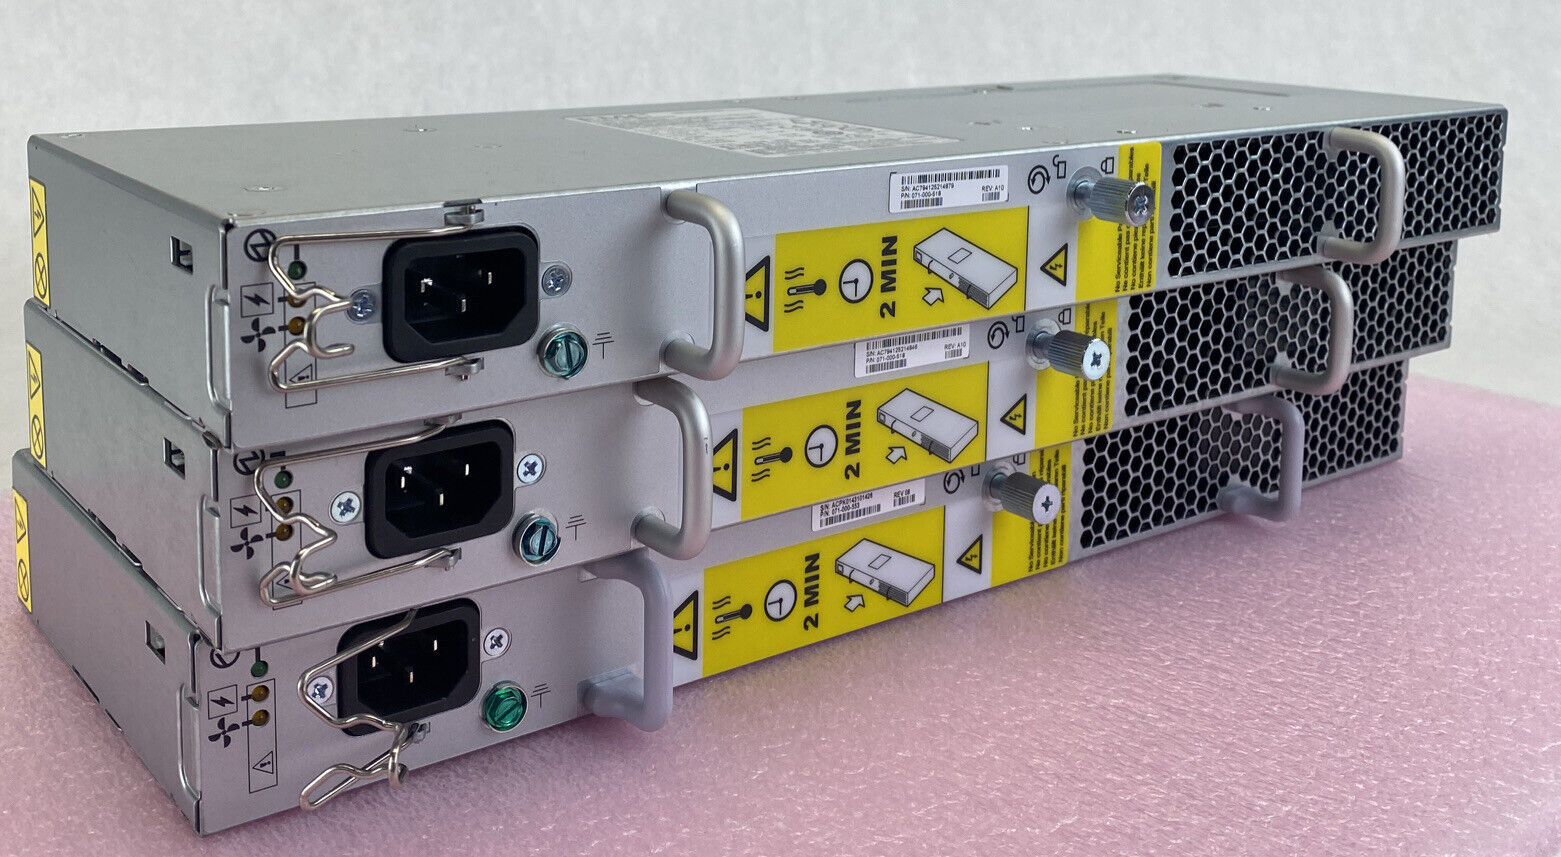 EMC 071-000-518 400W DAE Hot-Swap AC SG7008 server power supply Lot of 3